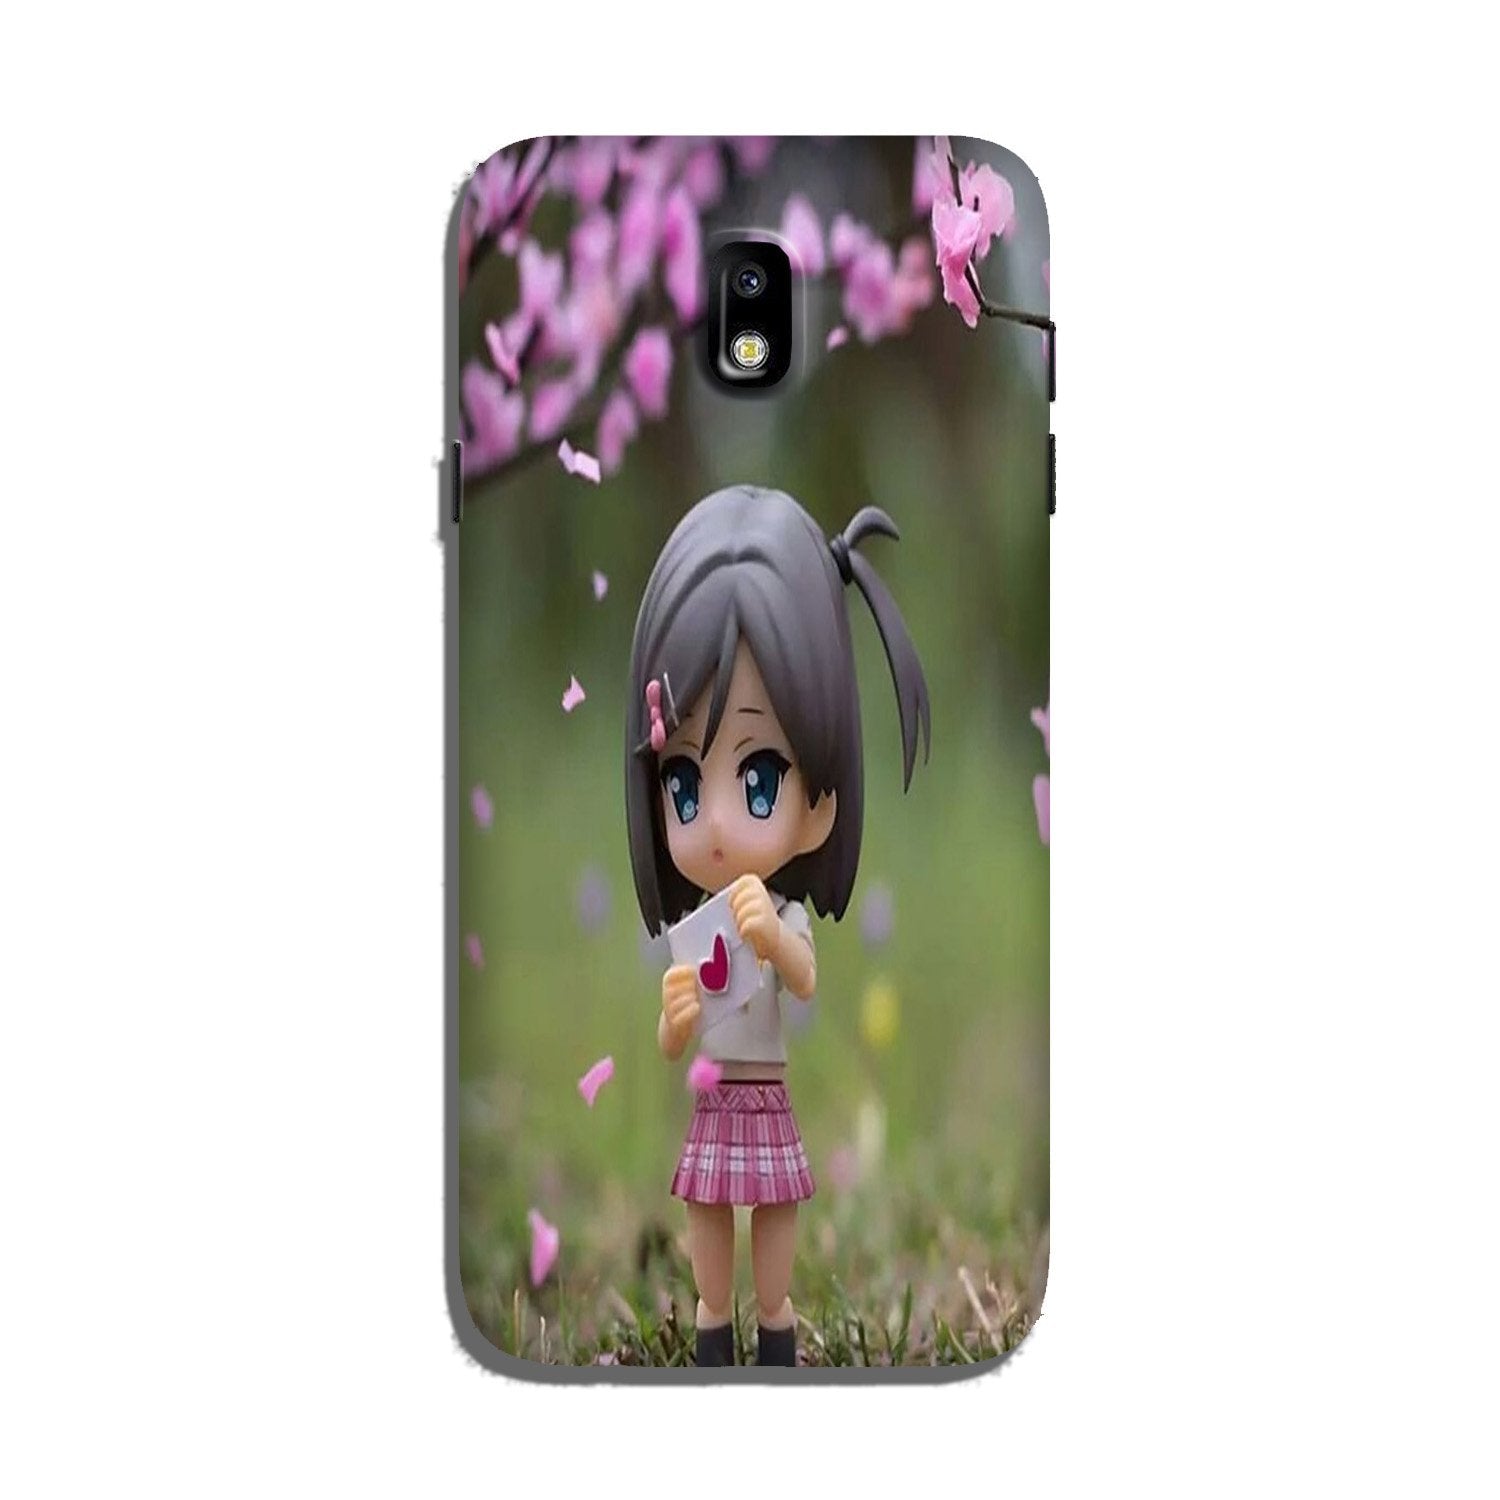 Cute Girl Case for Galaxy J3 Pro